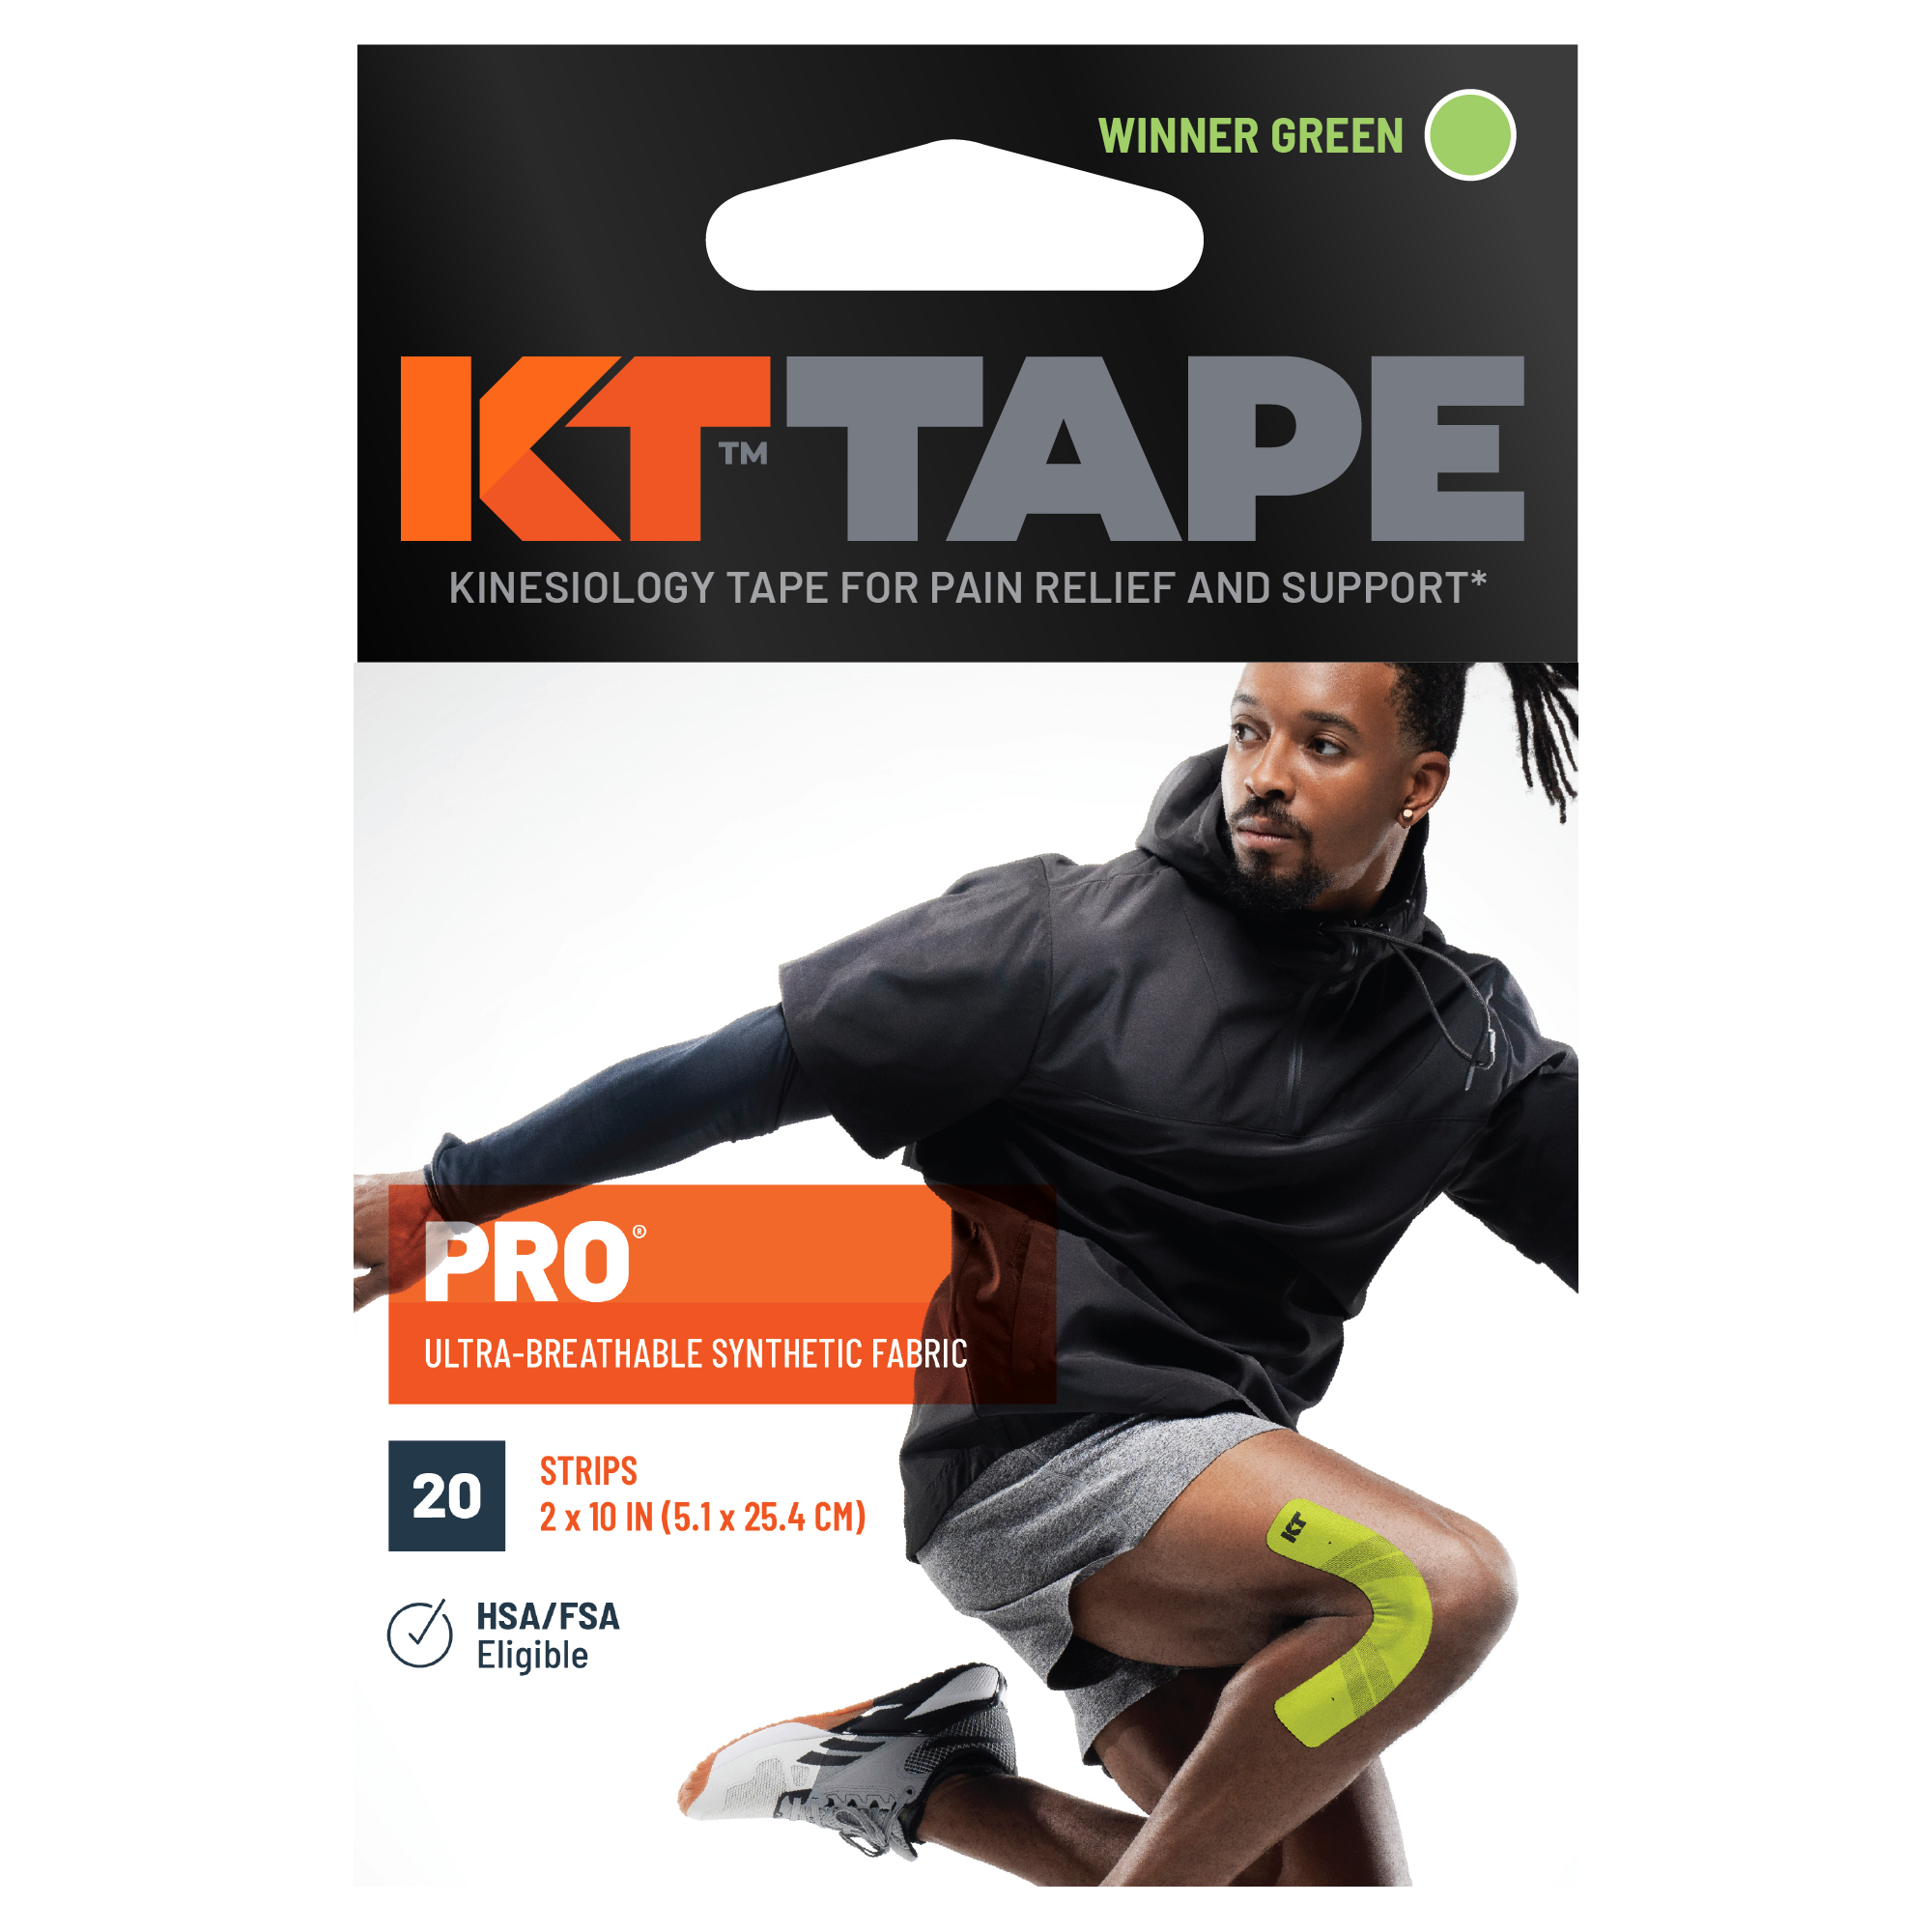 KT Tape Pro packaging#color_winner-green